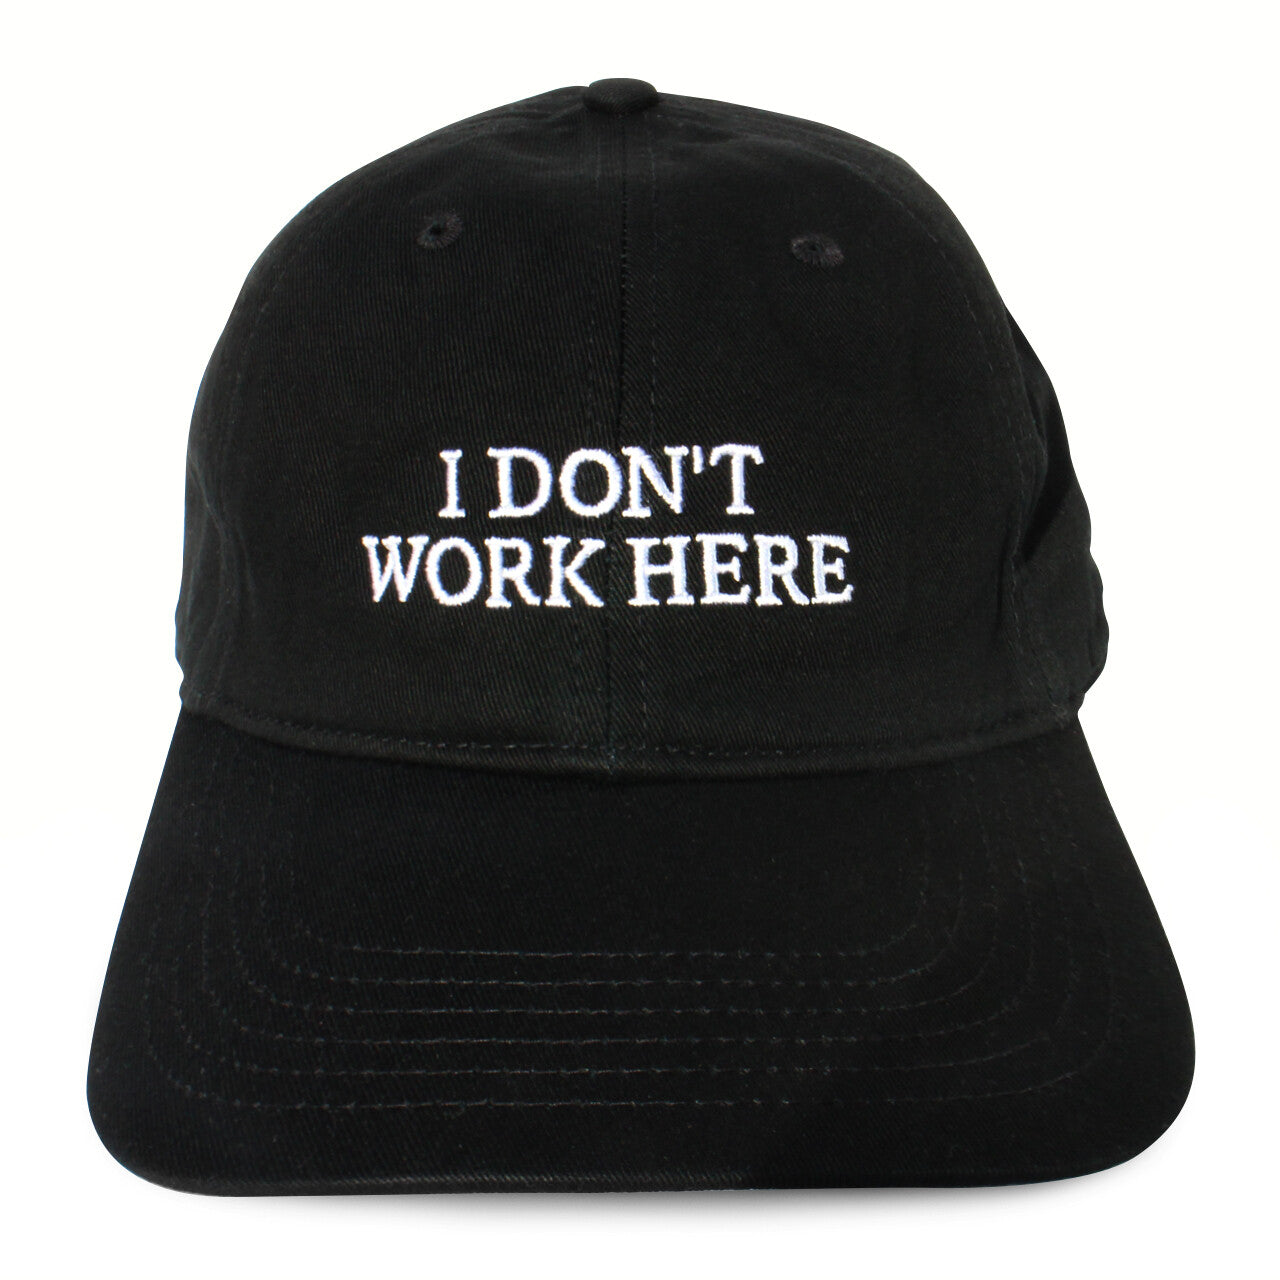 Cap - Sorry I don't work here - black